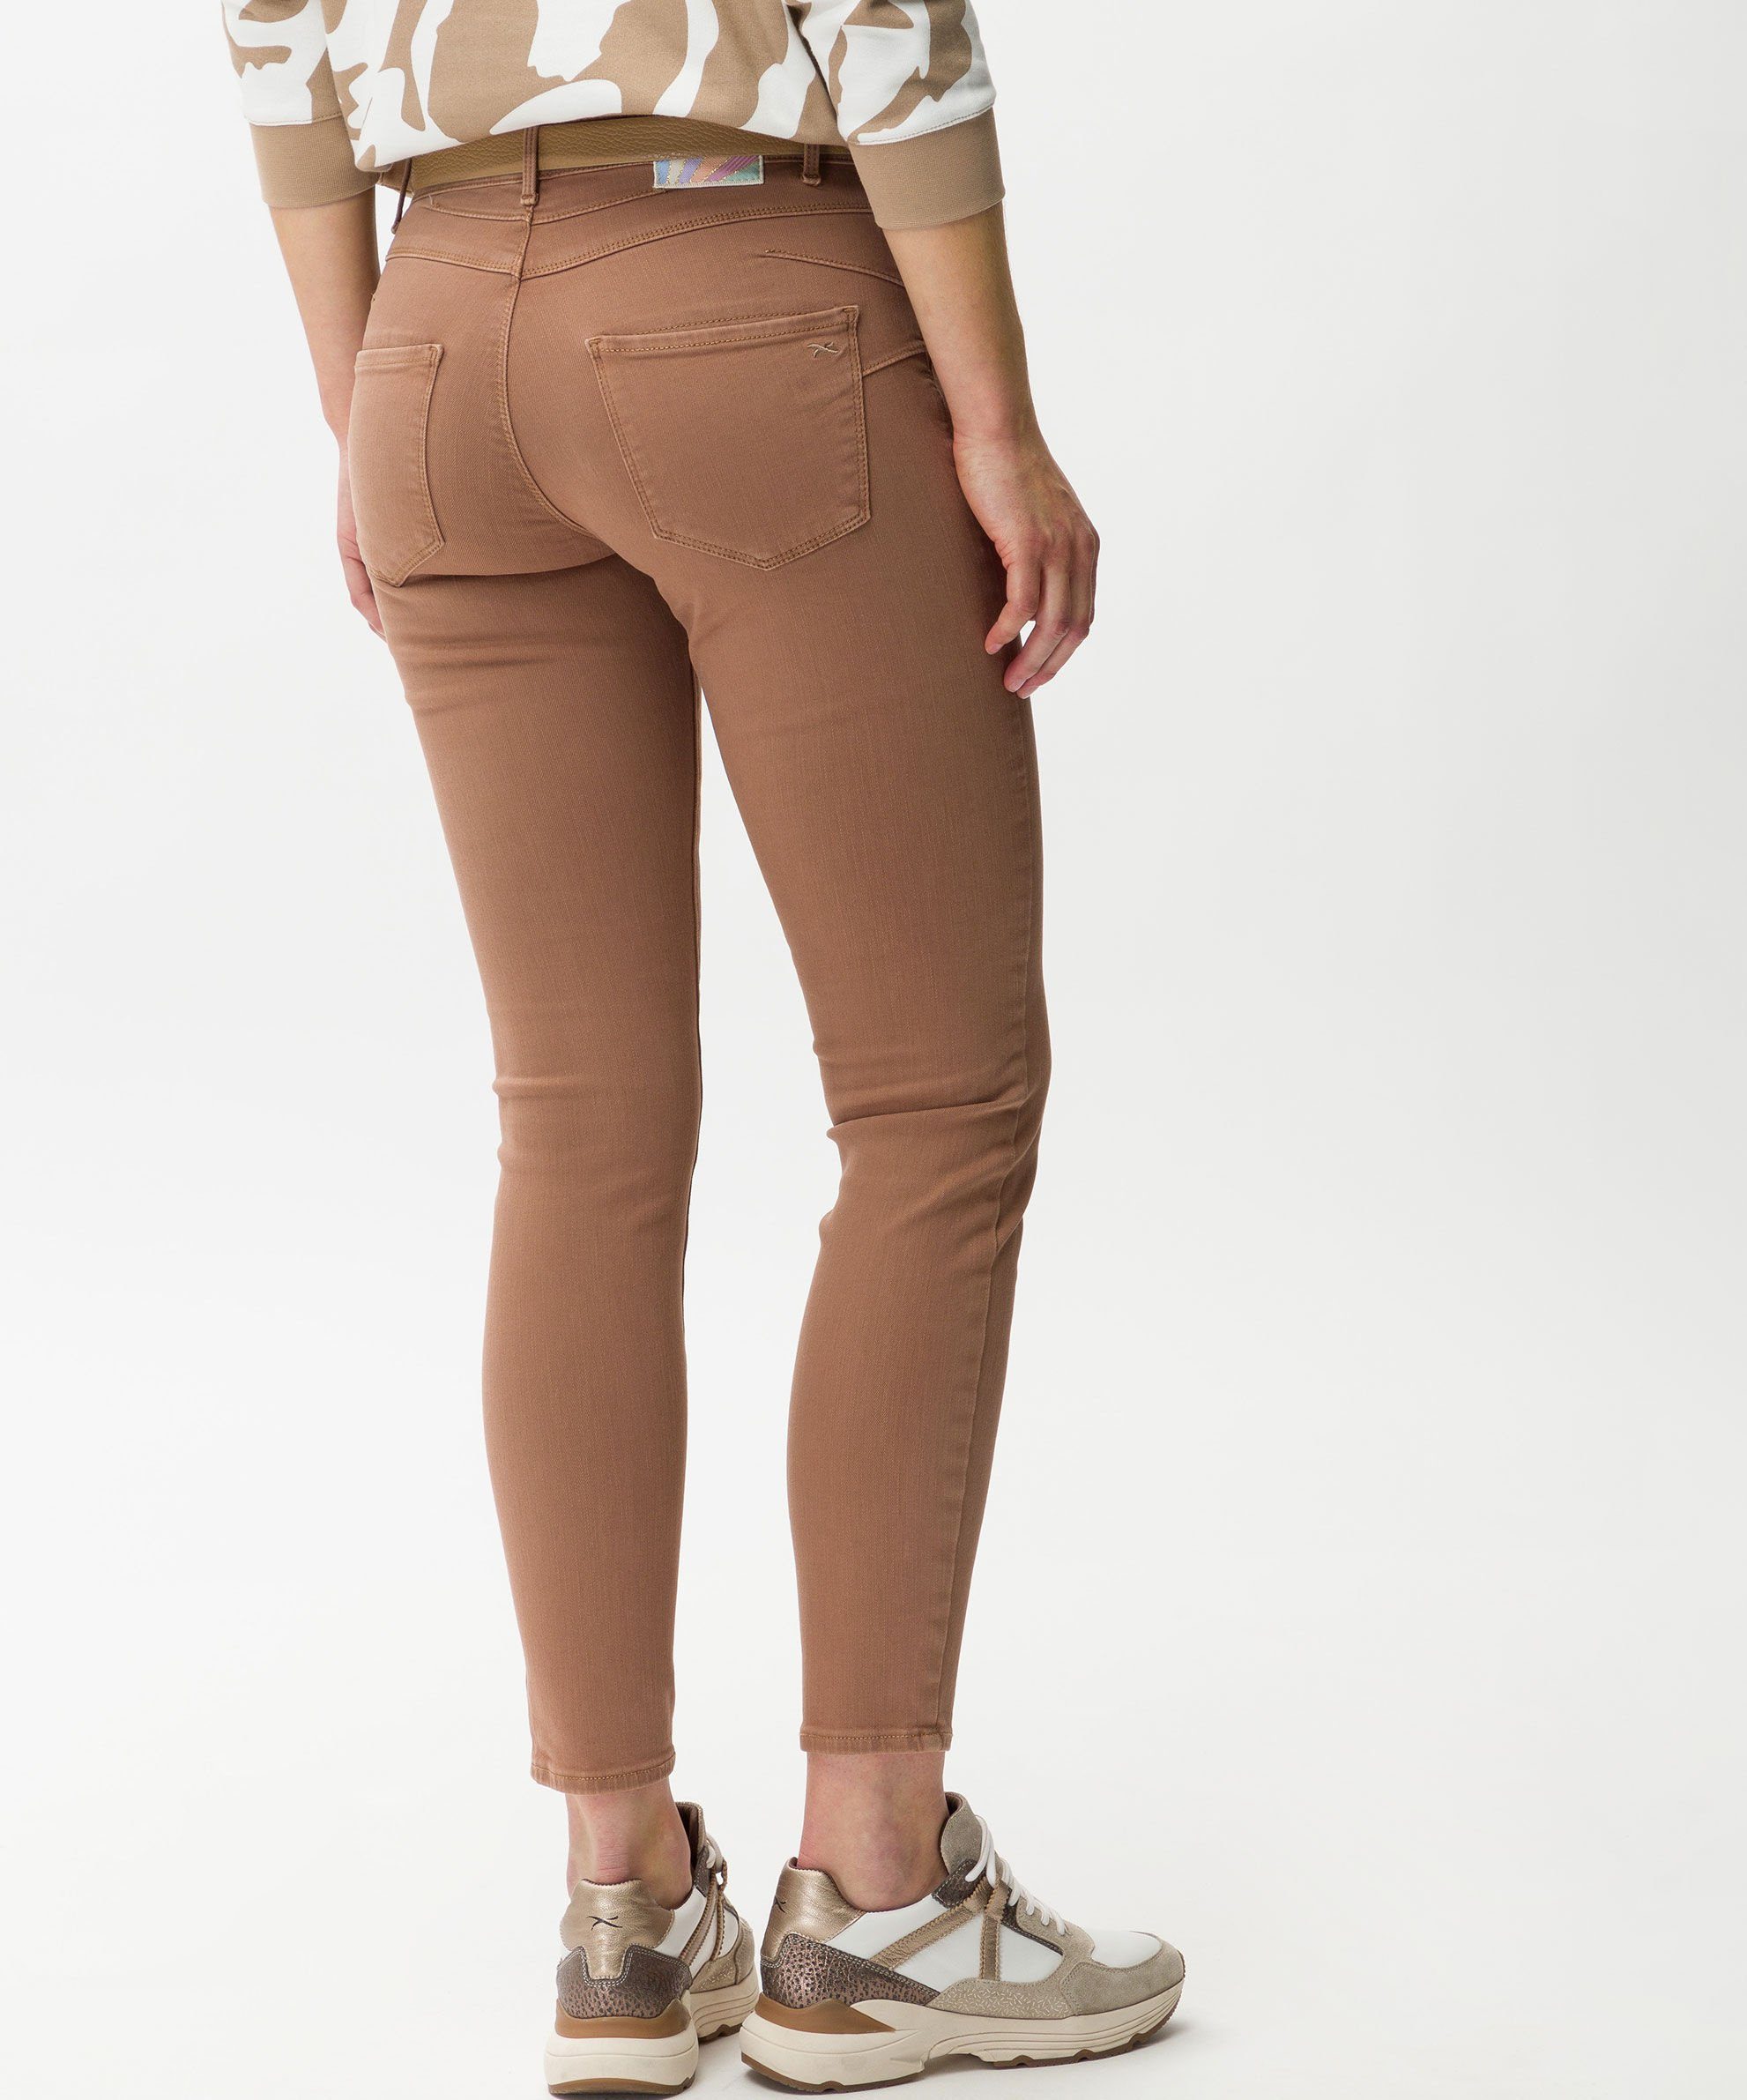 Röhrenjeans oak Skinny-fit-Jeans Brax Stylingdetails mit trendigen